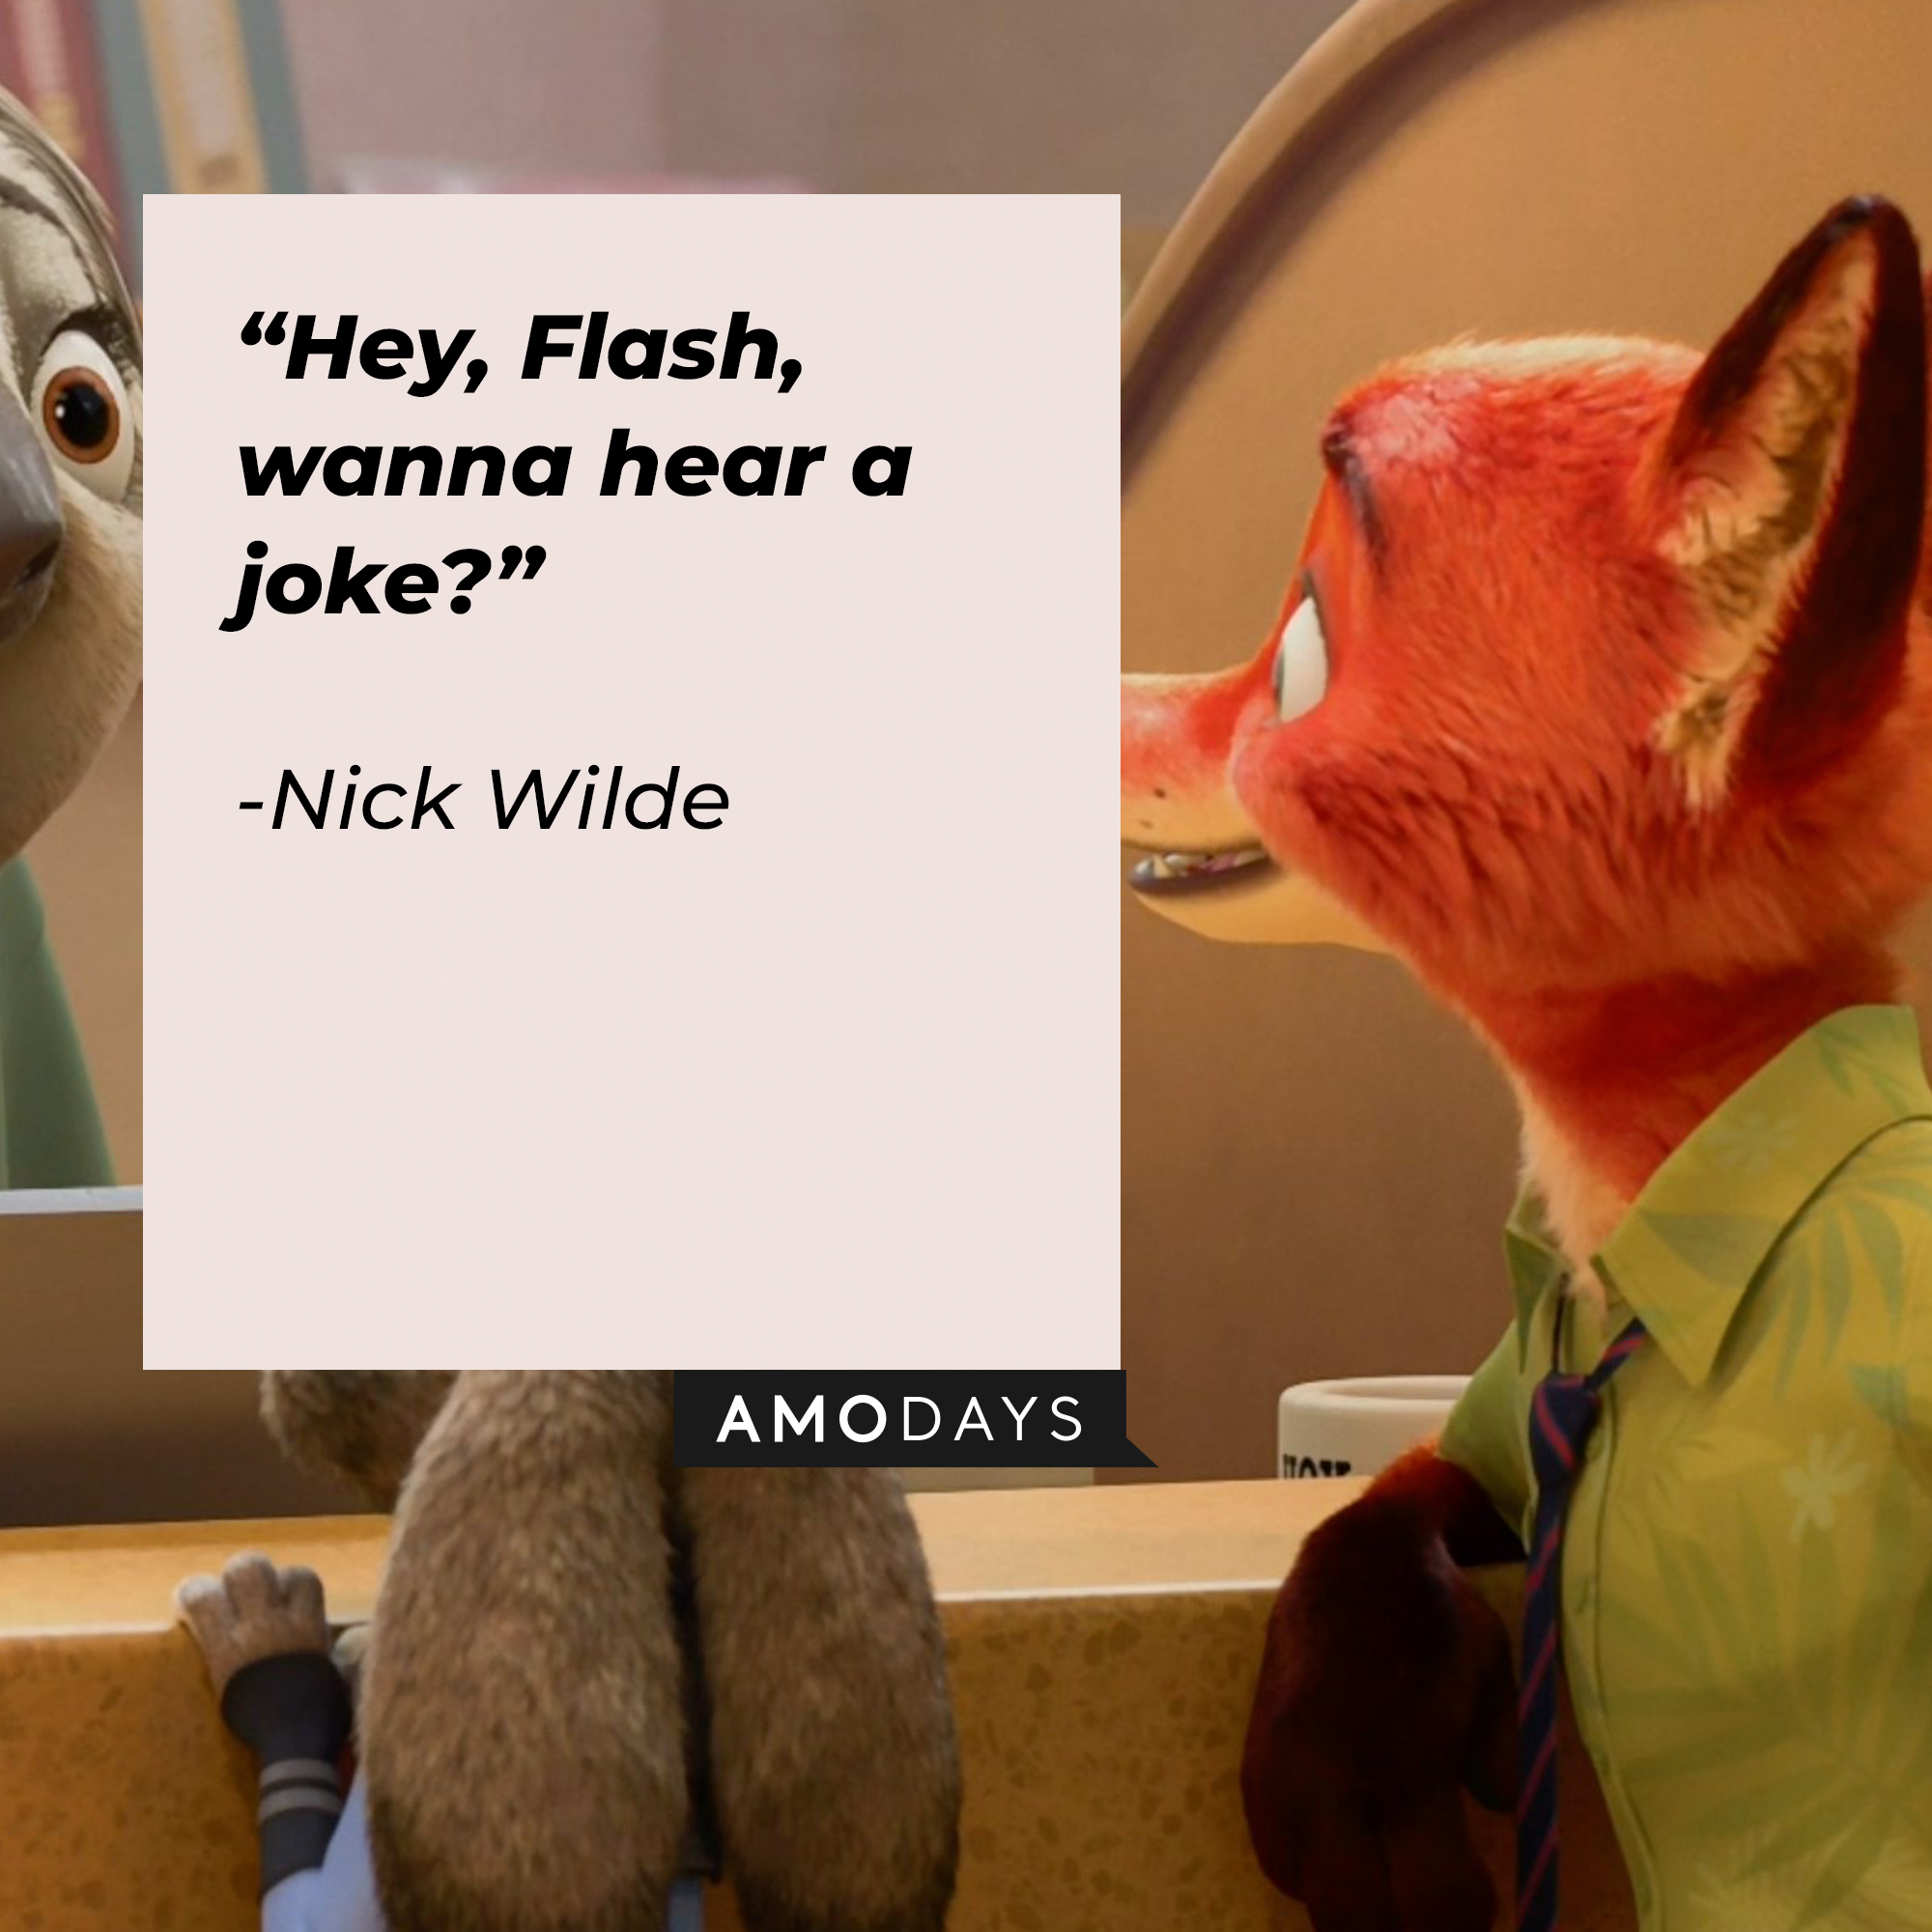 Nick Wilde, with his quote: “Hey, Flash, wanna hear a joke?” | Source: facebook.com/DisneyZootopia